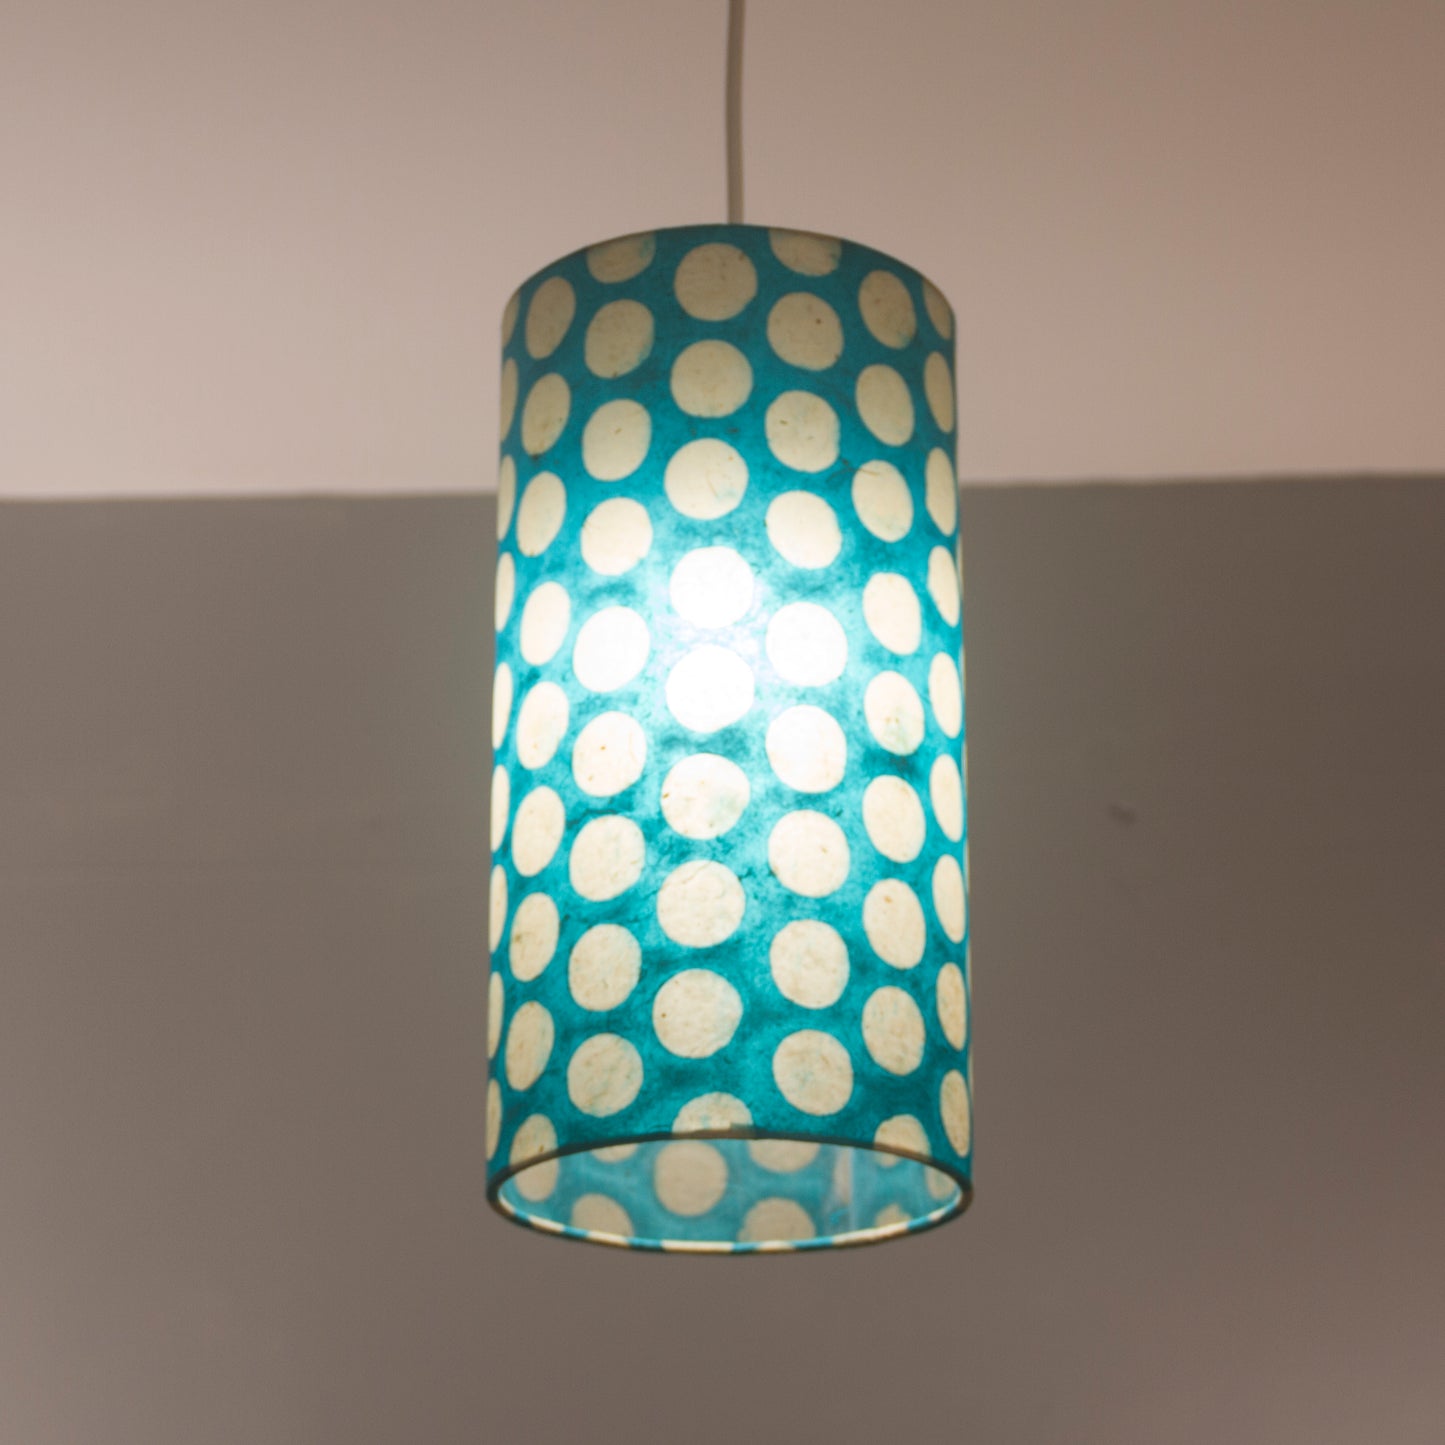 Oval Lamp Shade - P97 - Batik Dots on Cyan, 20cm(w) x 30cm(h) x 13cm(d)